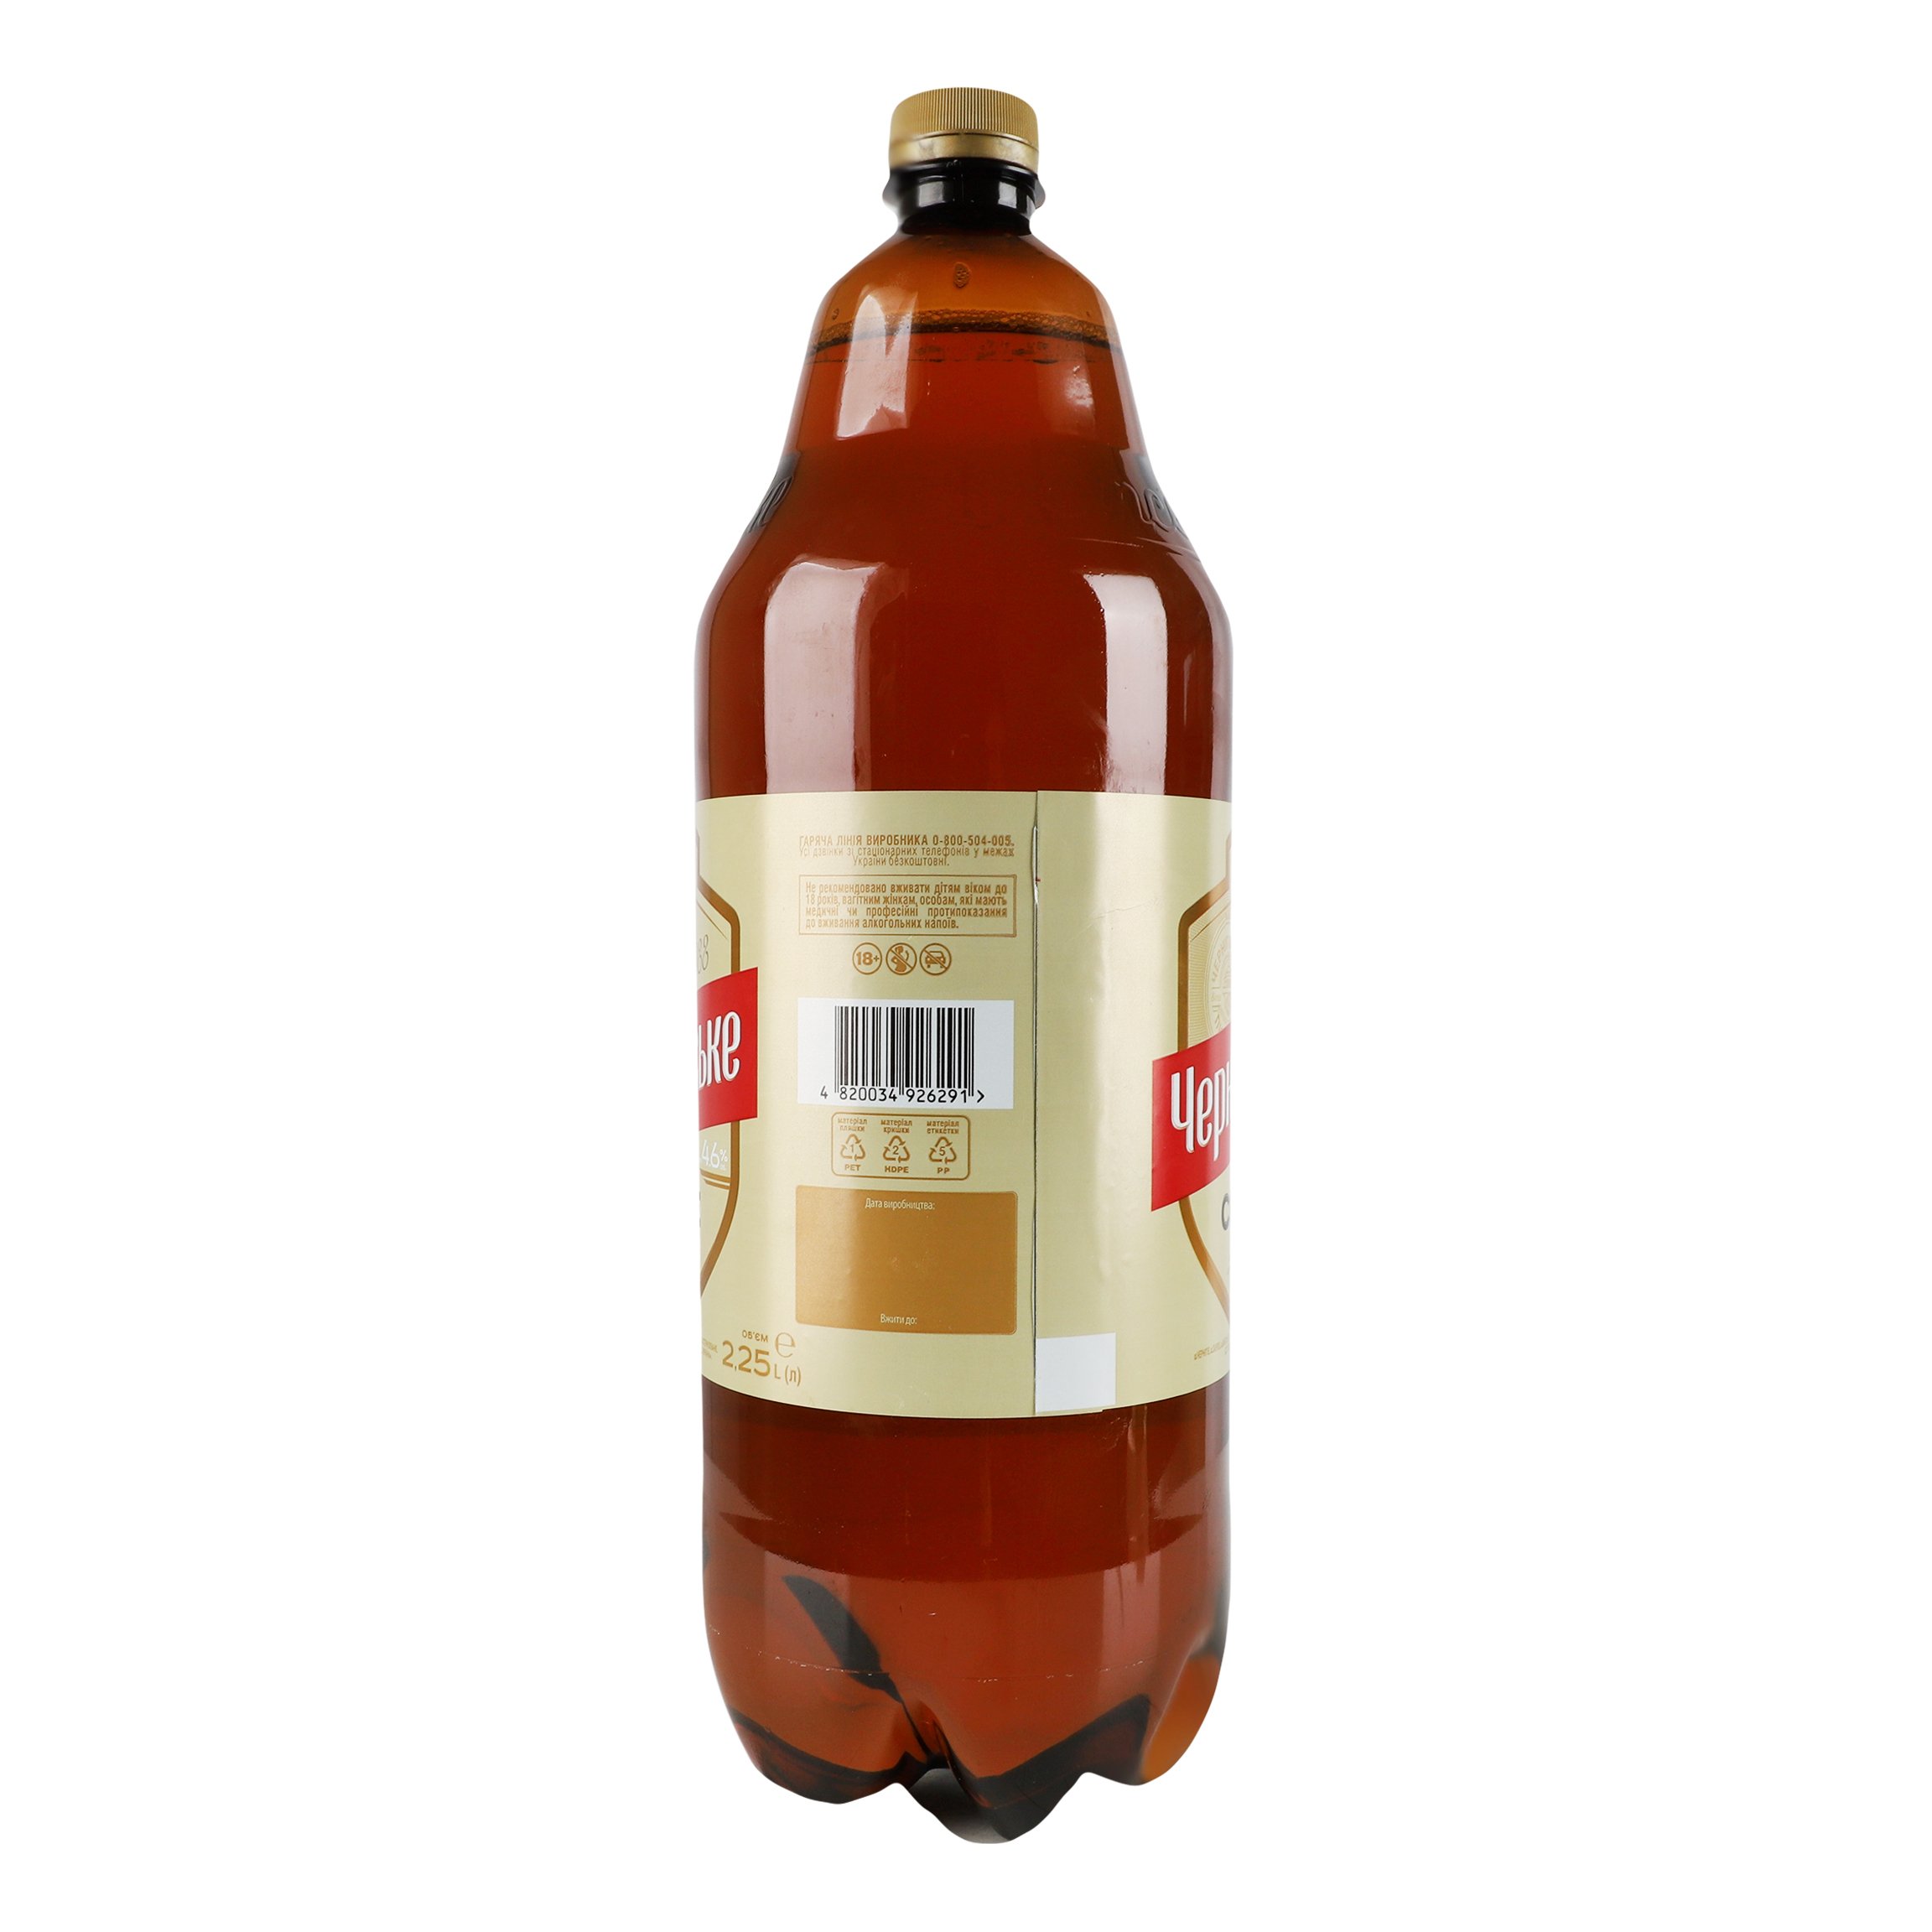 Пиво Чернігівське светлое 4.6% 2.25 л - фото 3